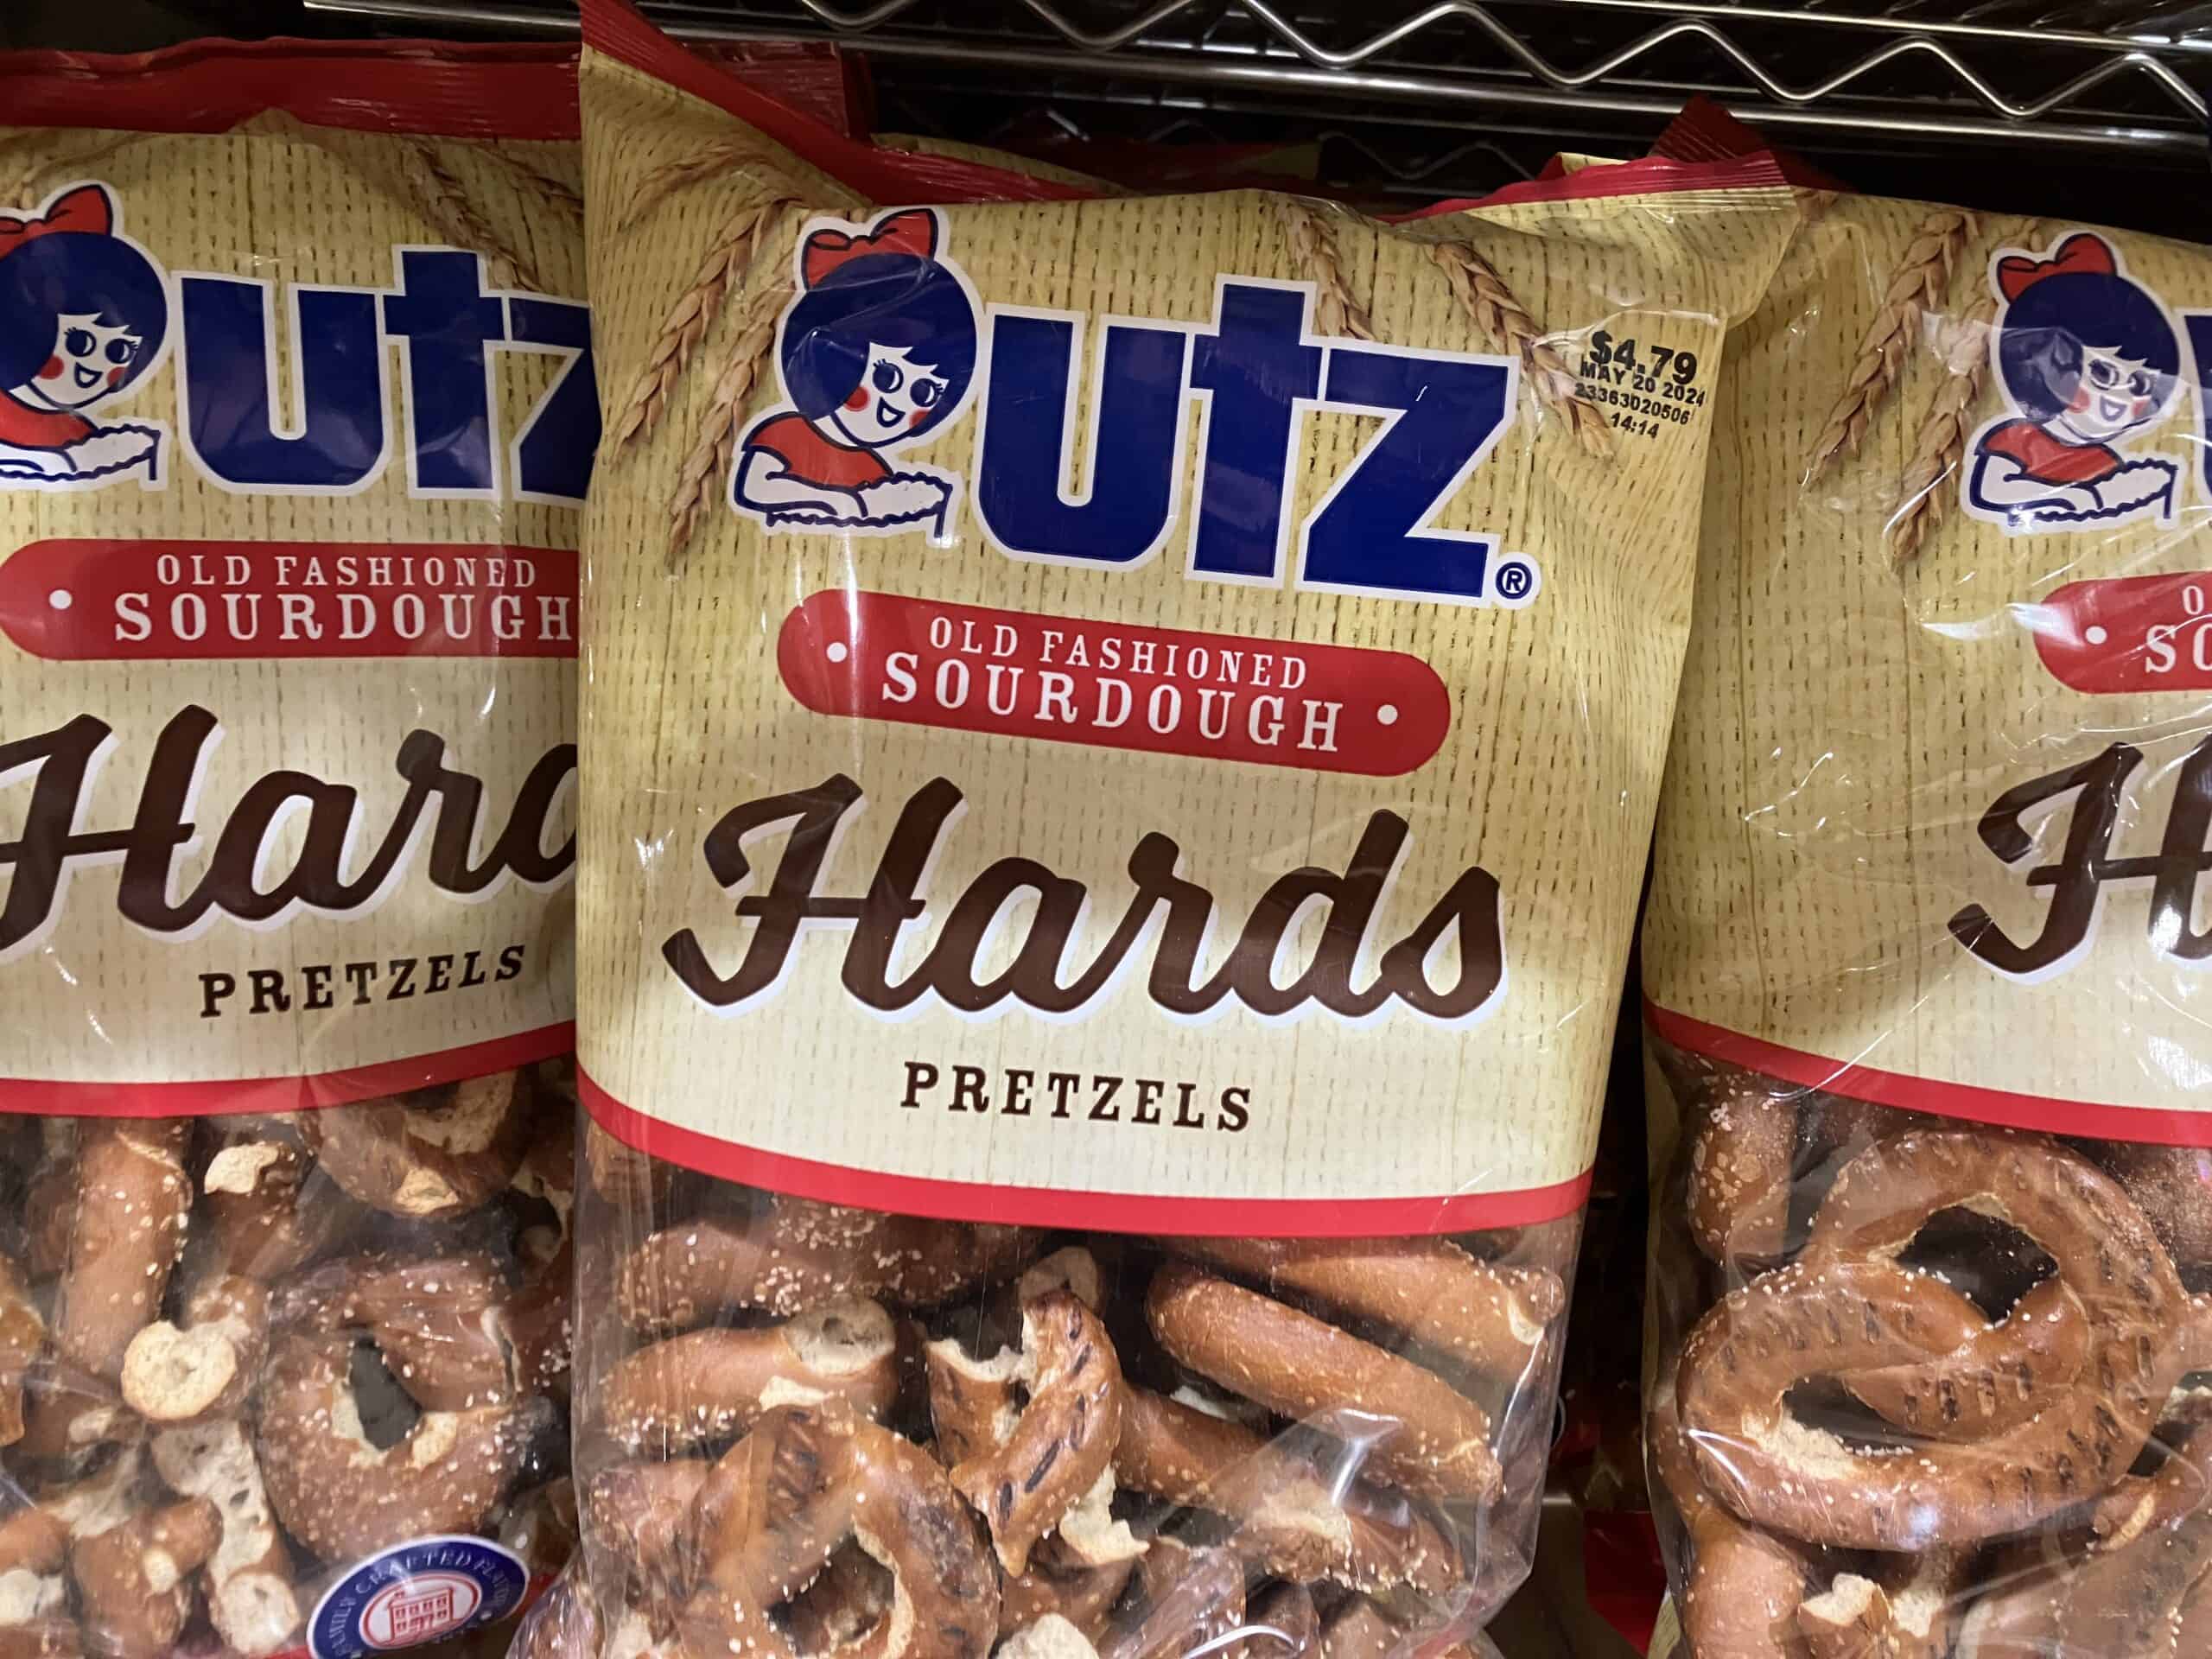 Utz Hards pretzels